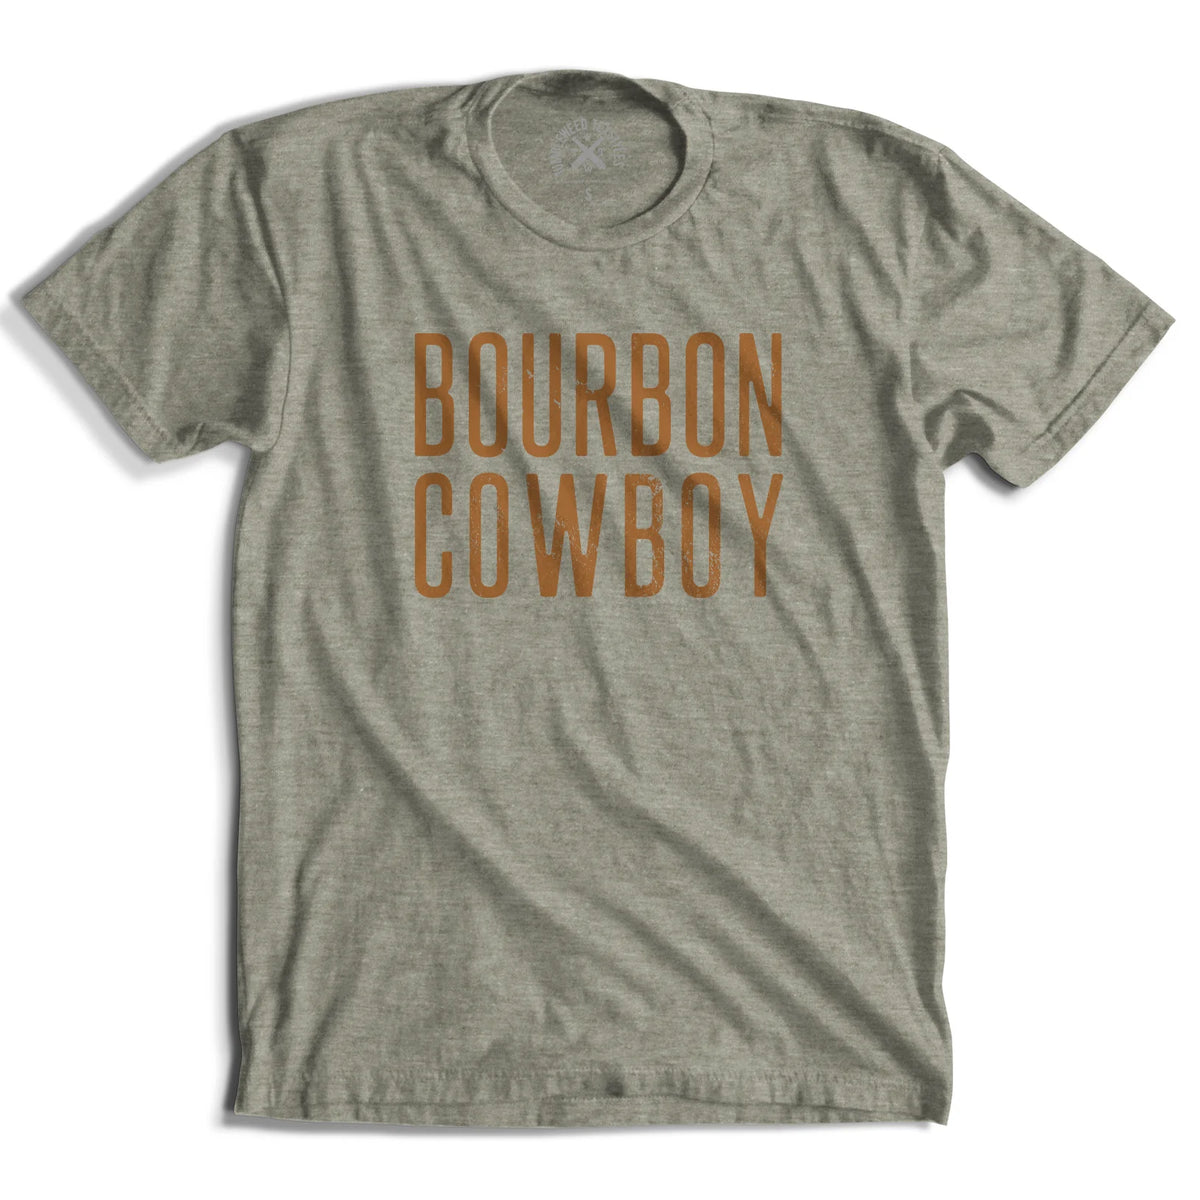 Bourbon Cowboy Tee